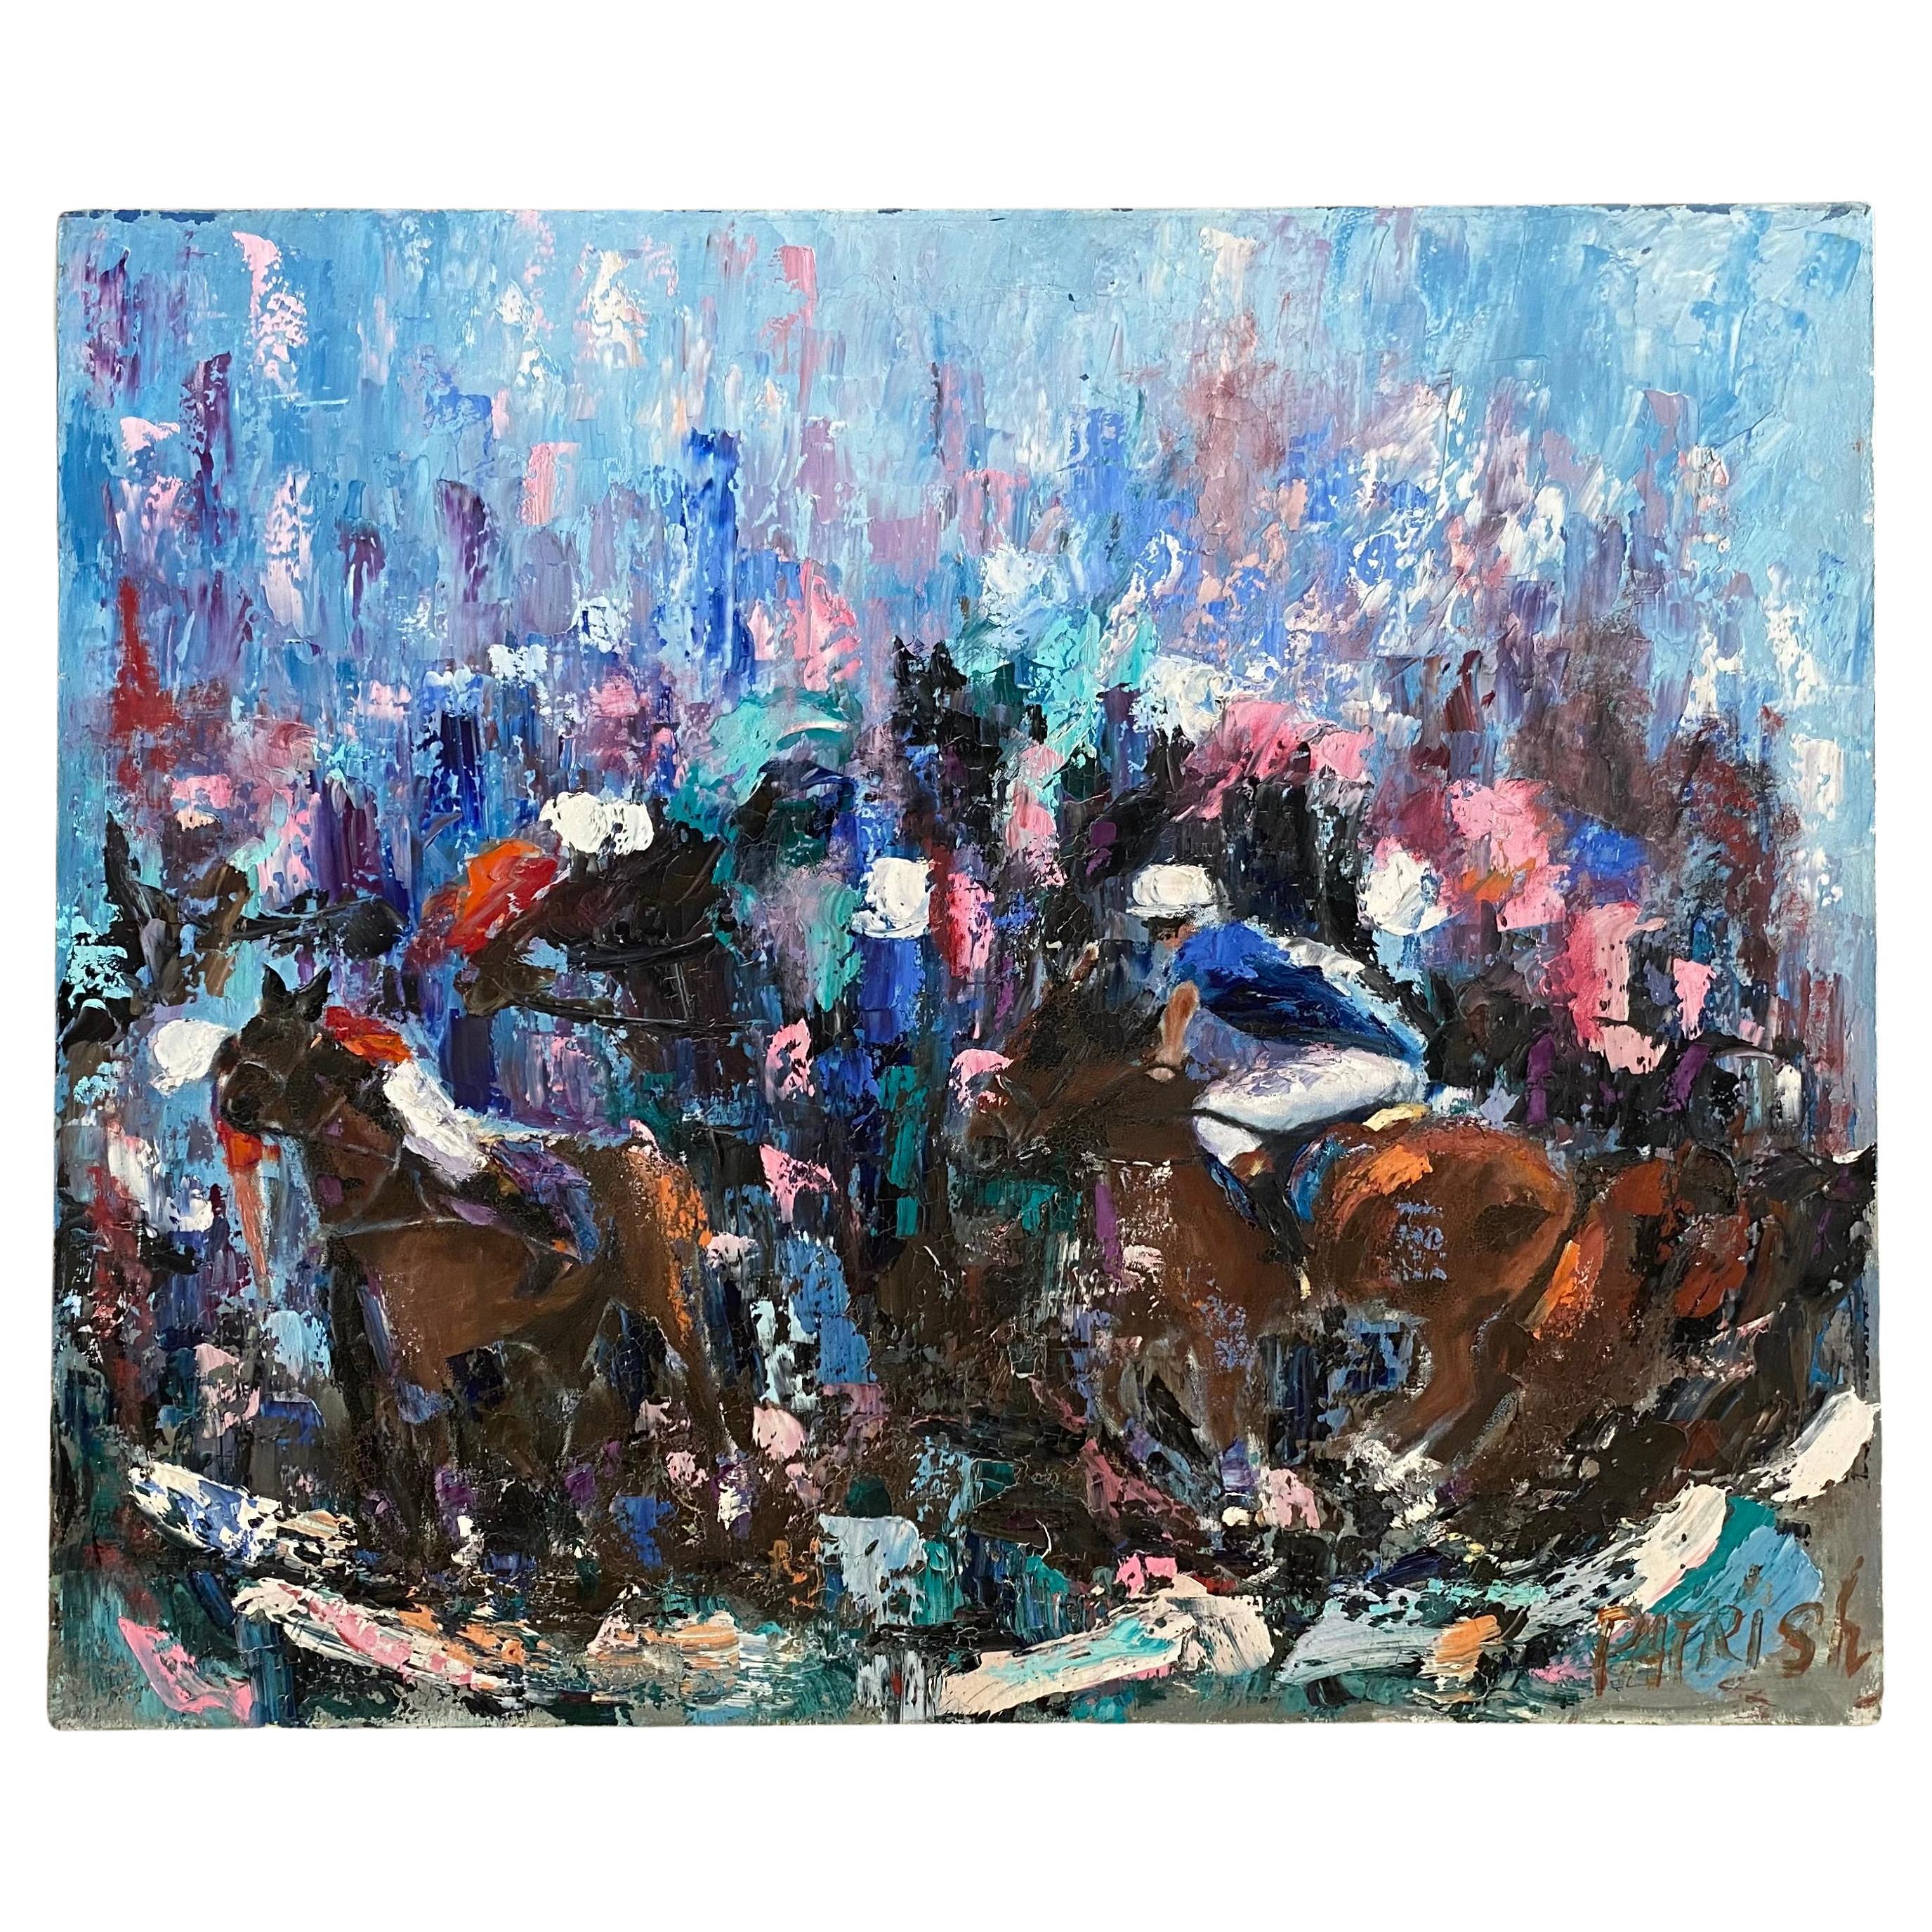 Pintura abstracta al óleo sobre lienzo Carreras de caballos, firmada en venta